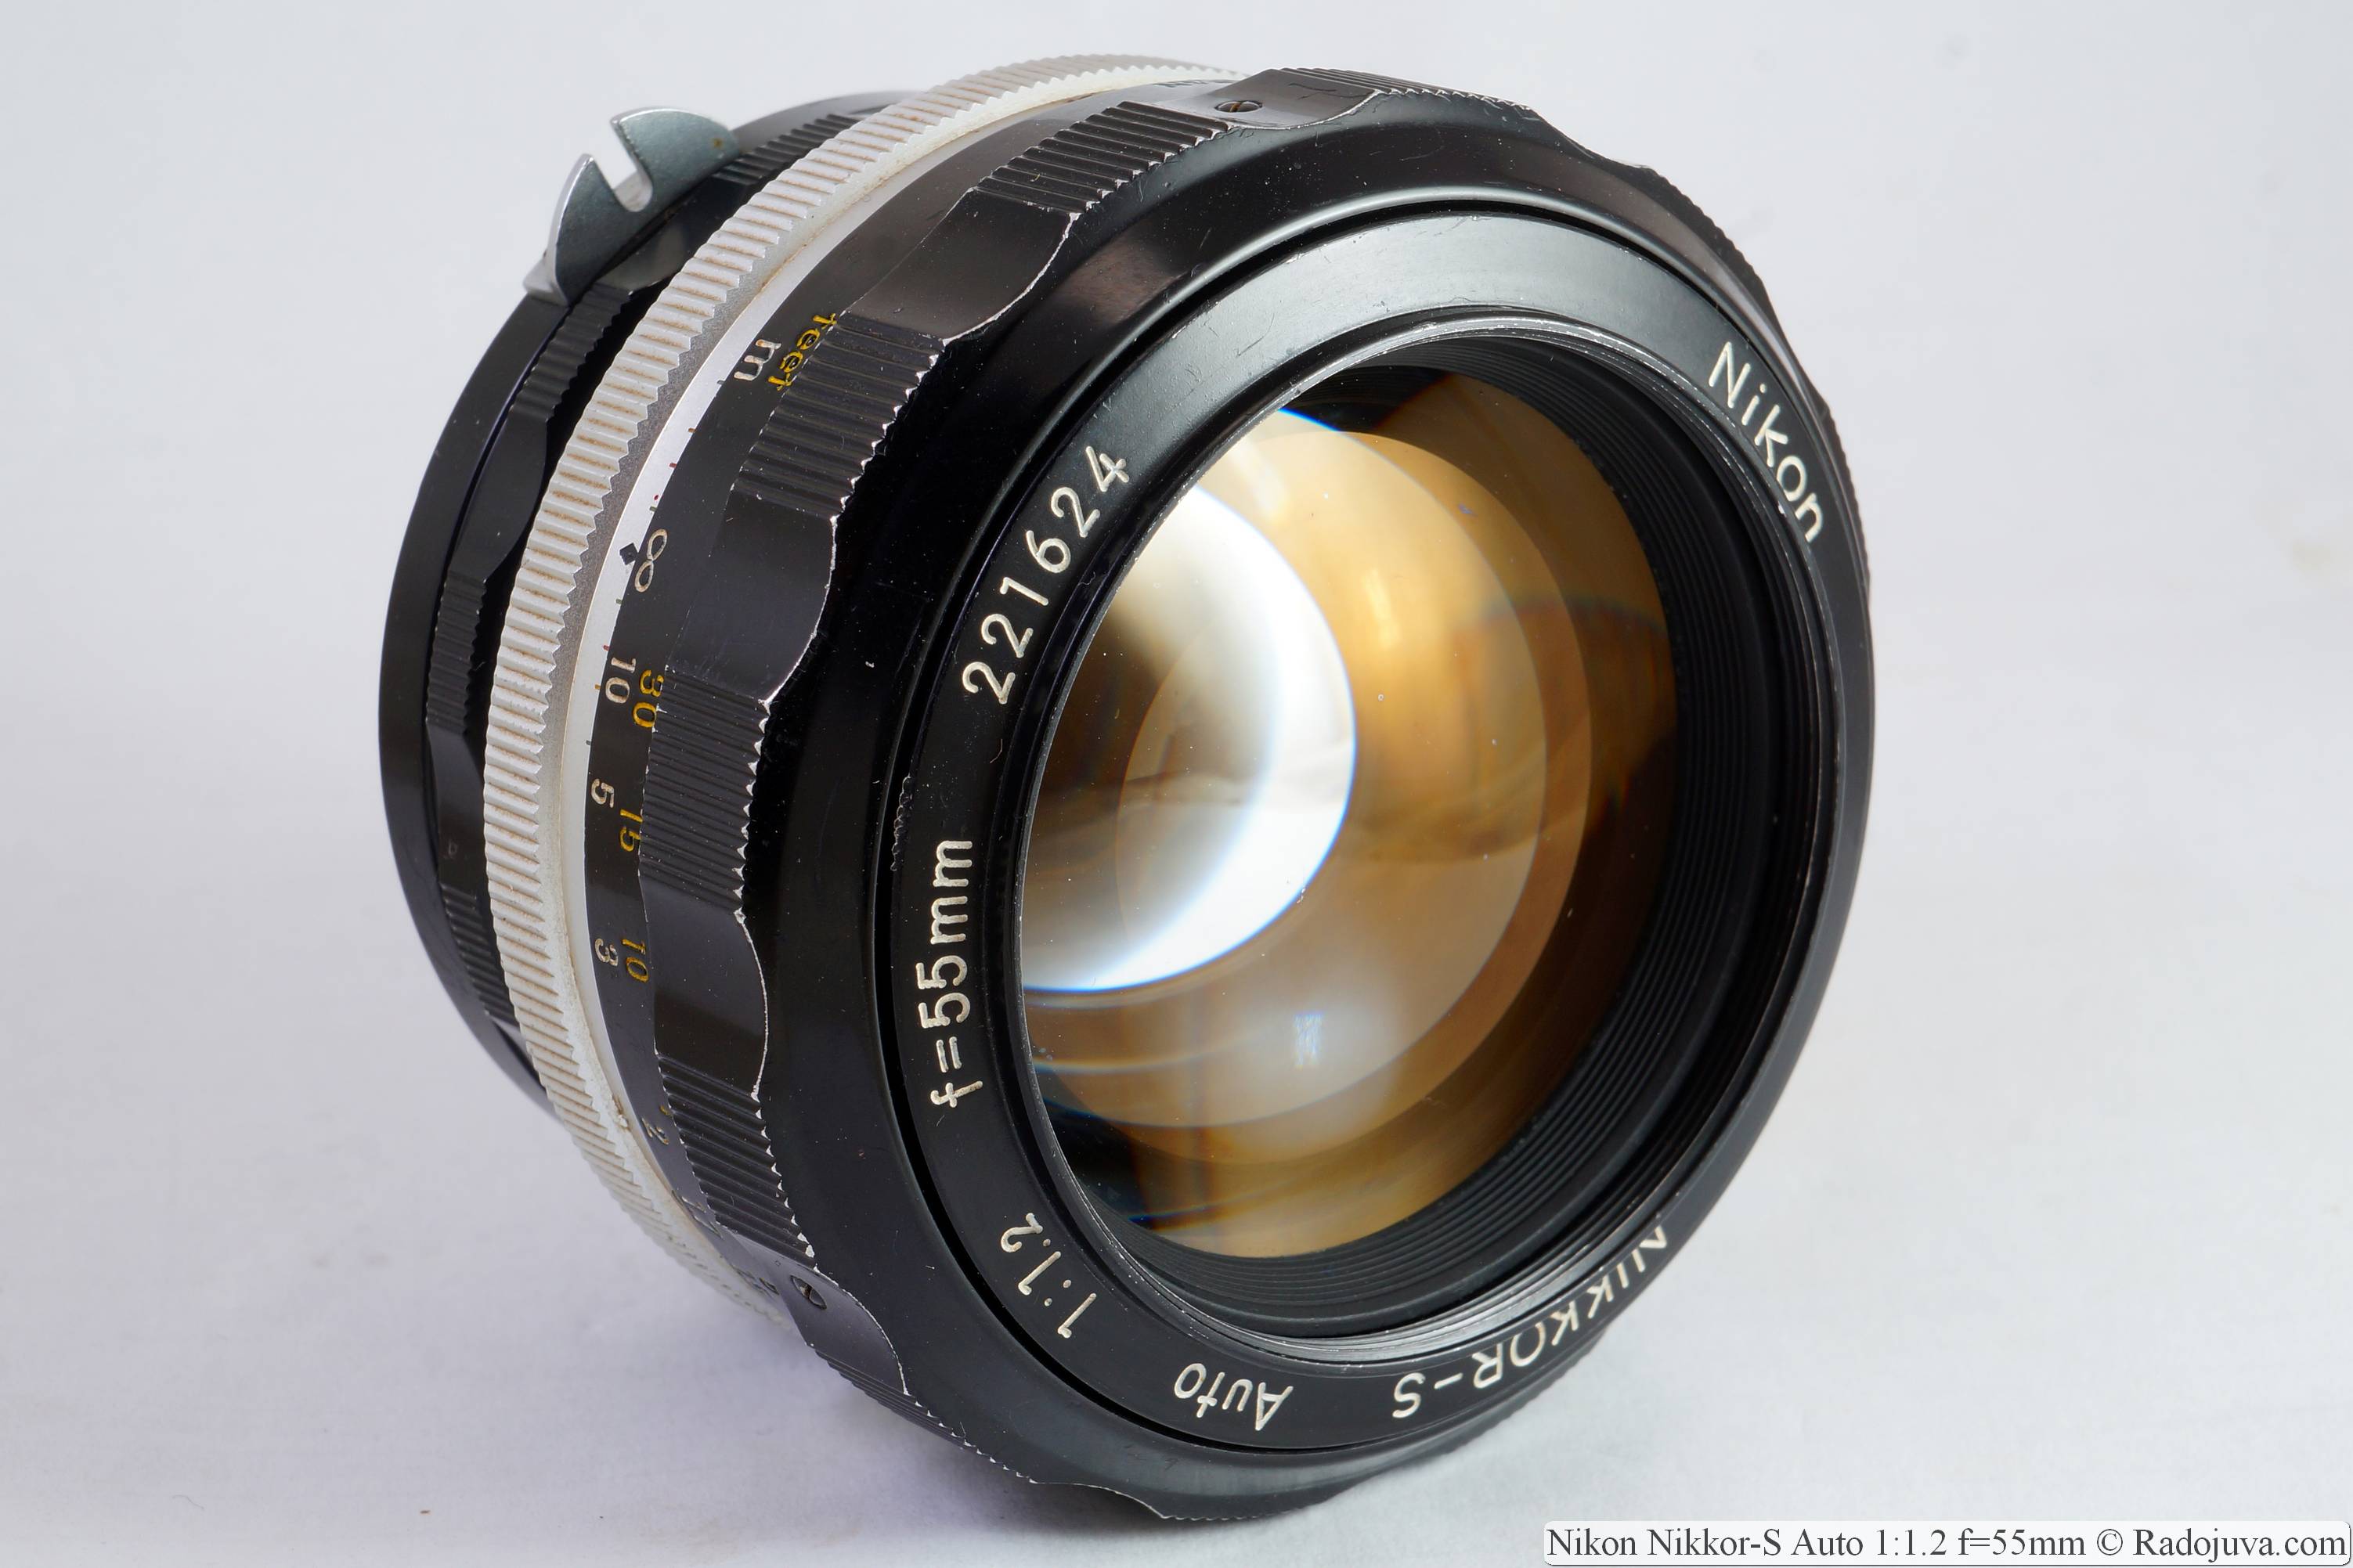 Nikon Nikkor-S Auto 1:1.2 f=55mm